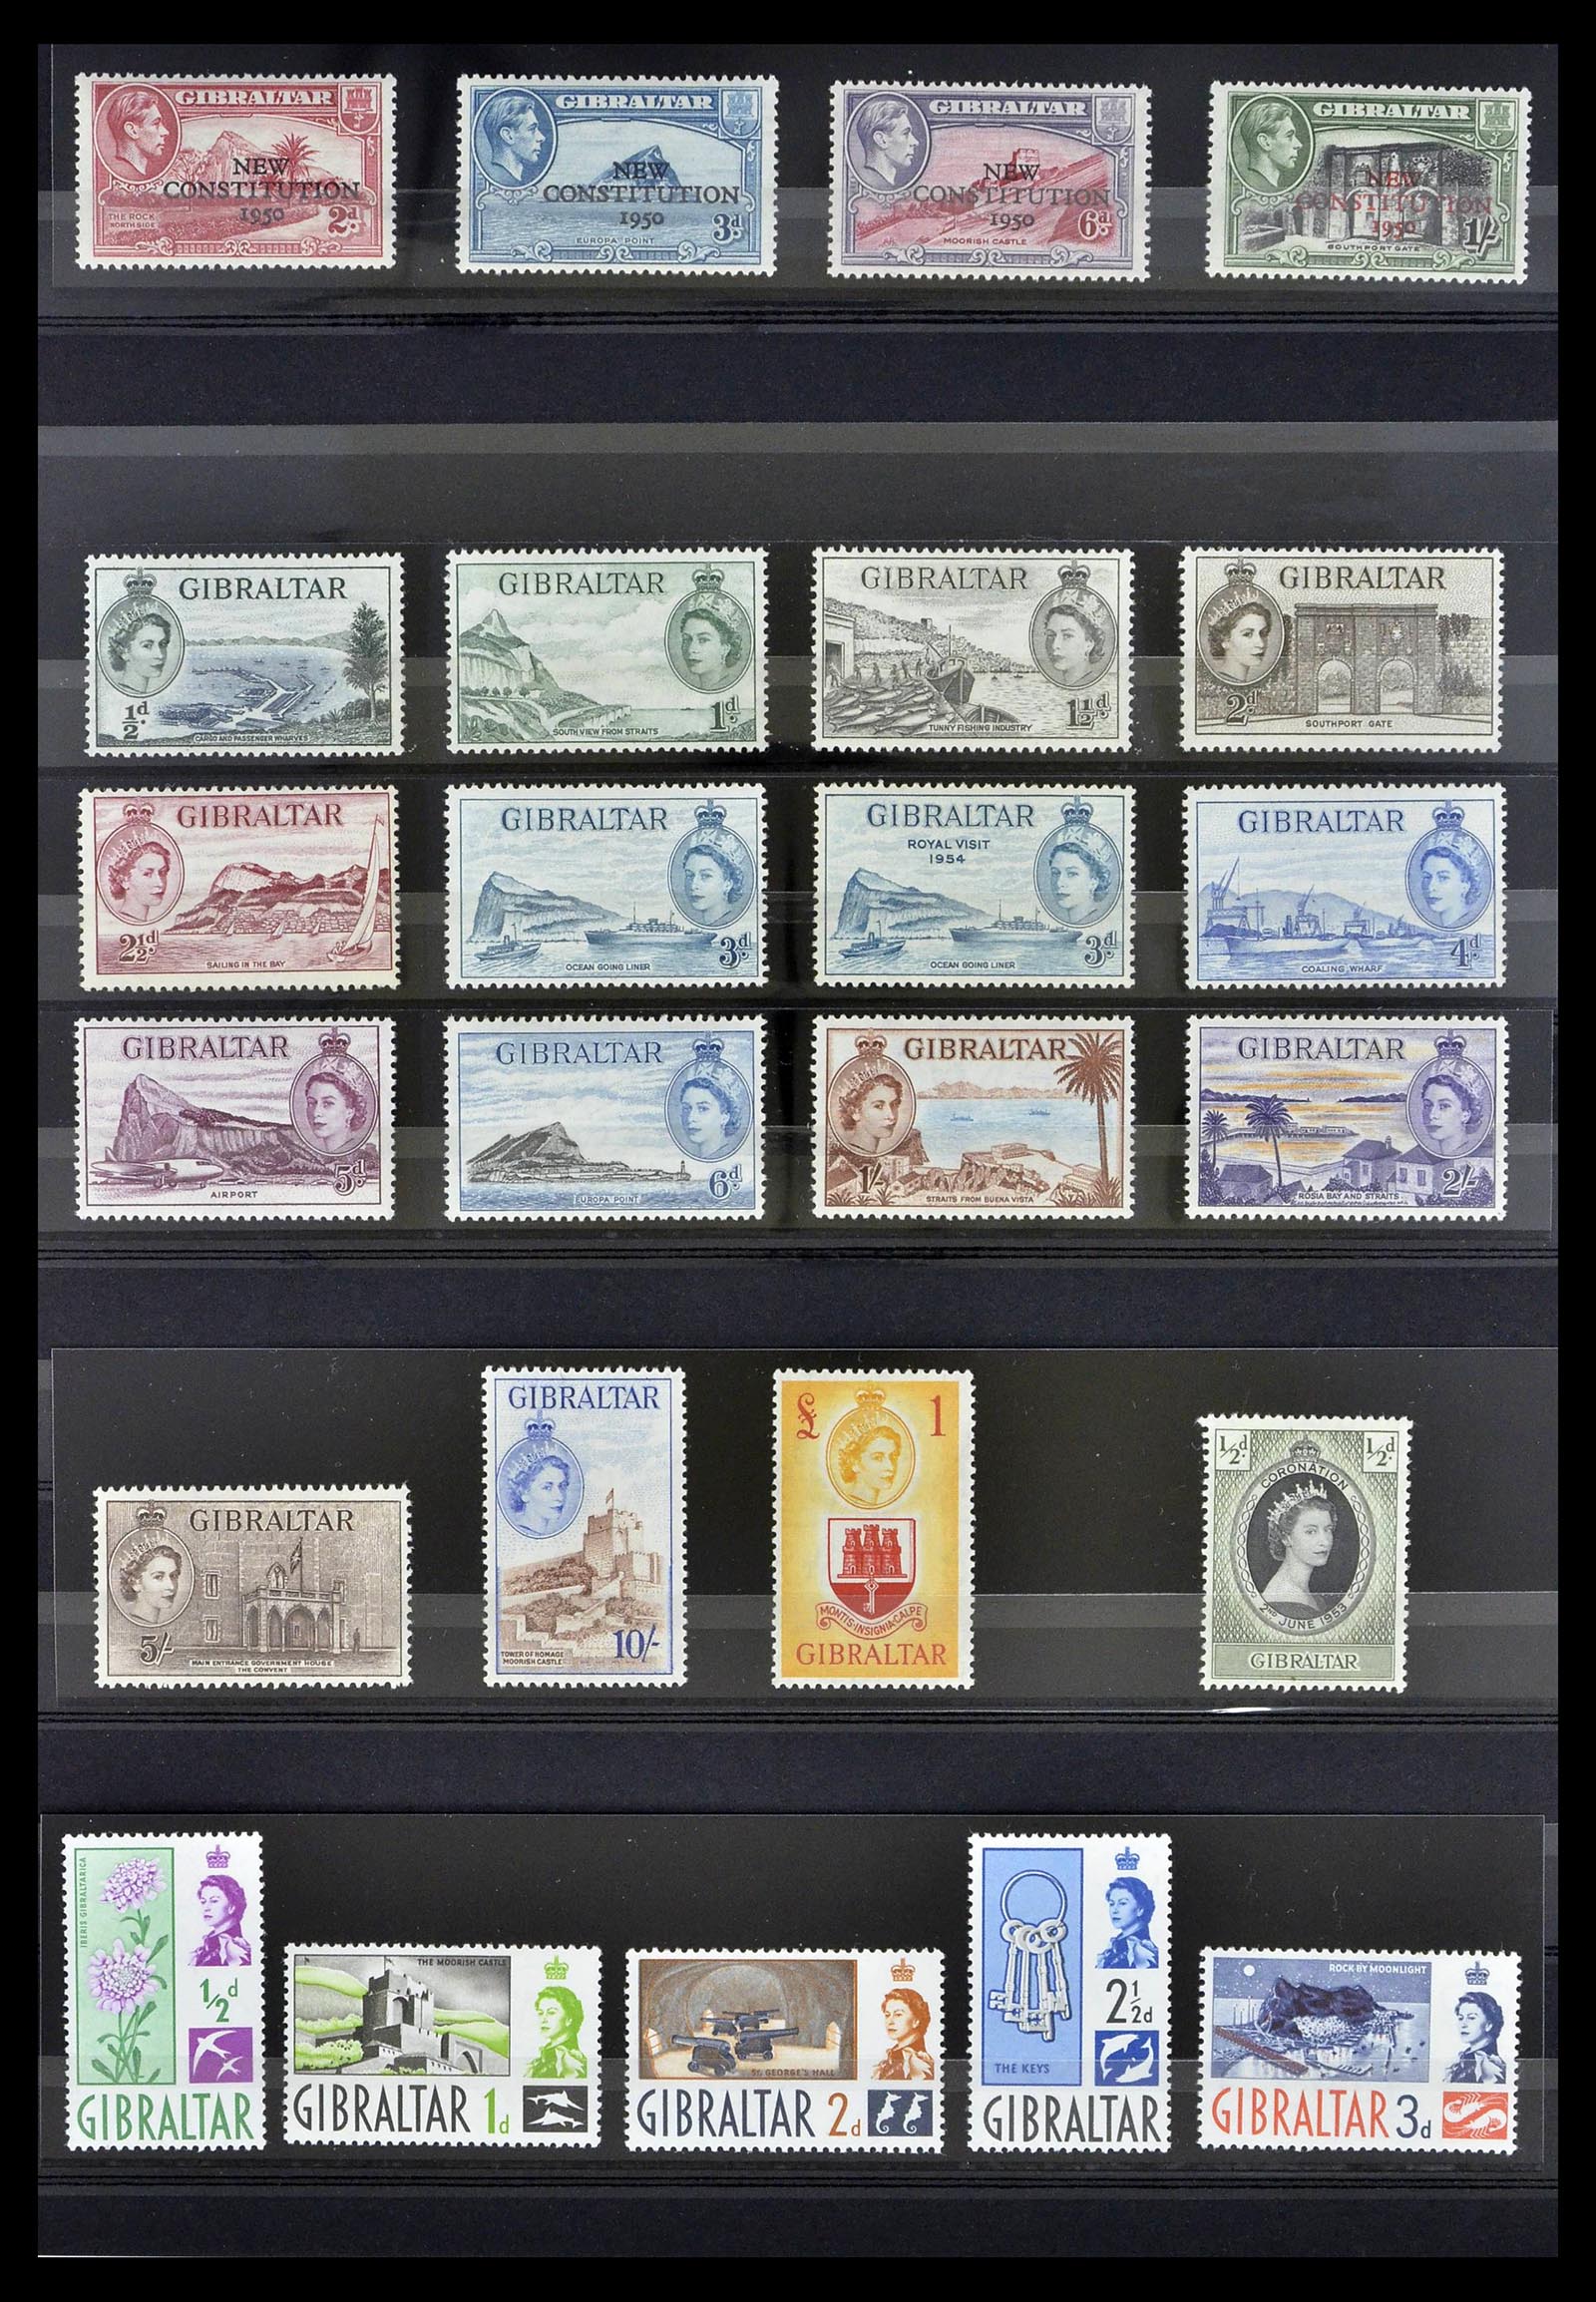 39278 0004 - Stamp collection 39278 Gibraltar 1935-1980.